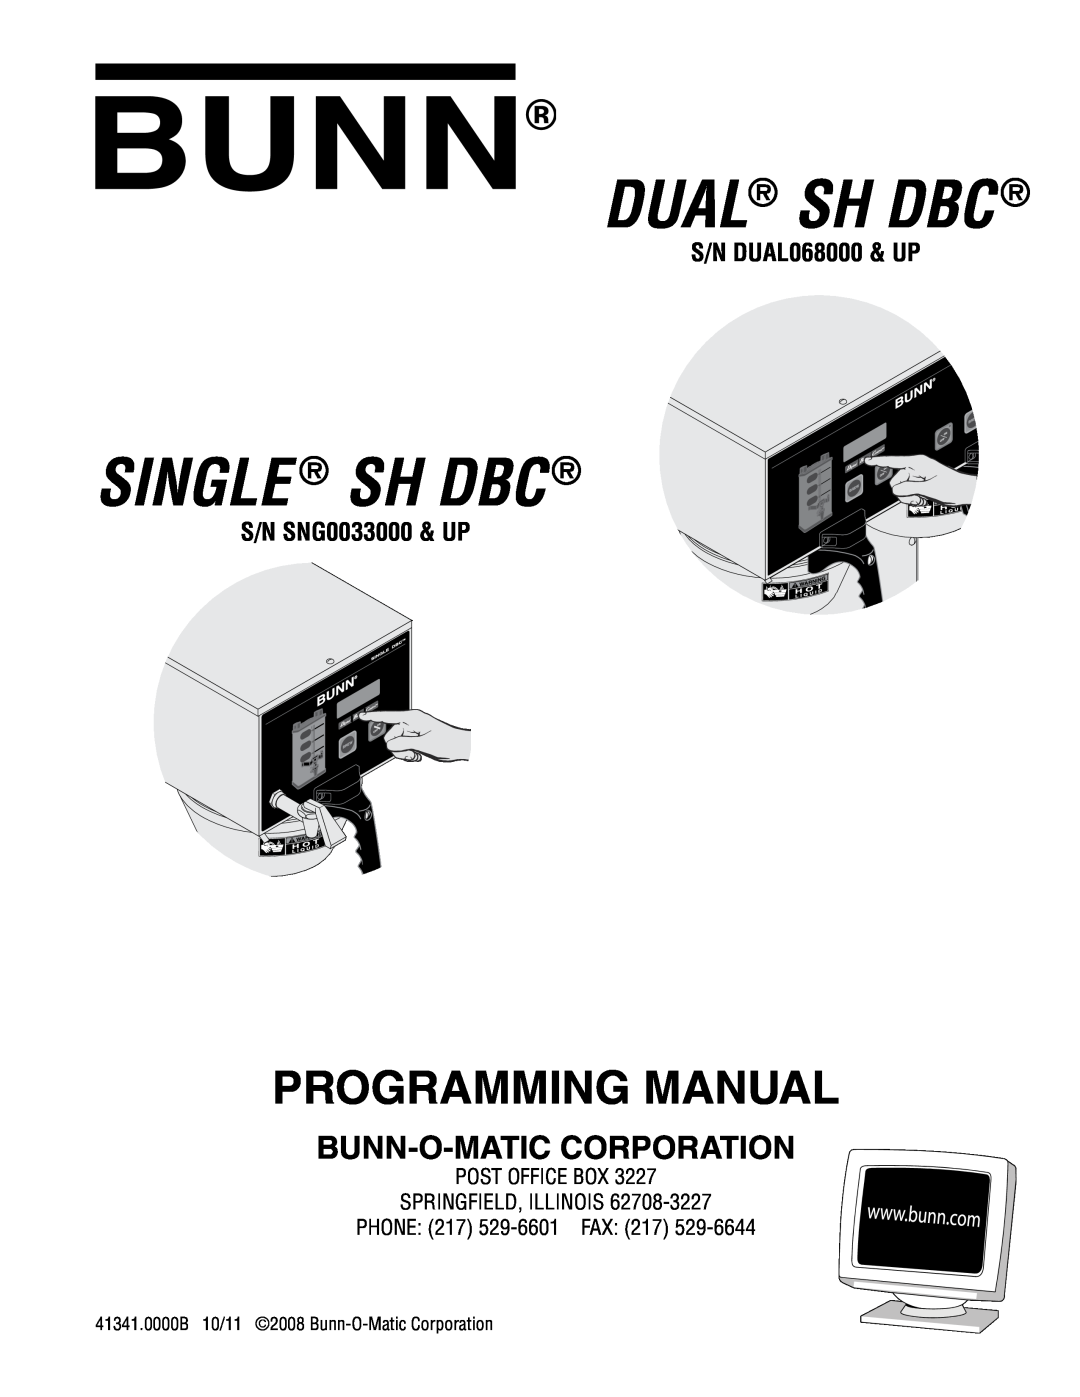 Bunn manual S/N SNG0033000 & UP, S/N DUAL068000 & UP, Dual Sh Dbc, Single Sh Dbc, Programming Manual, Heatedon, Risks 